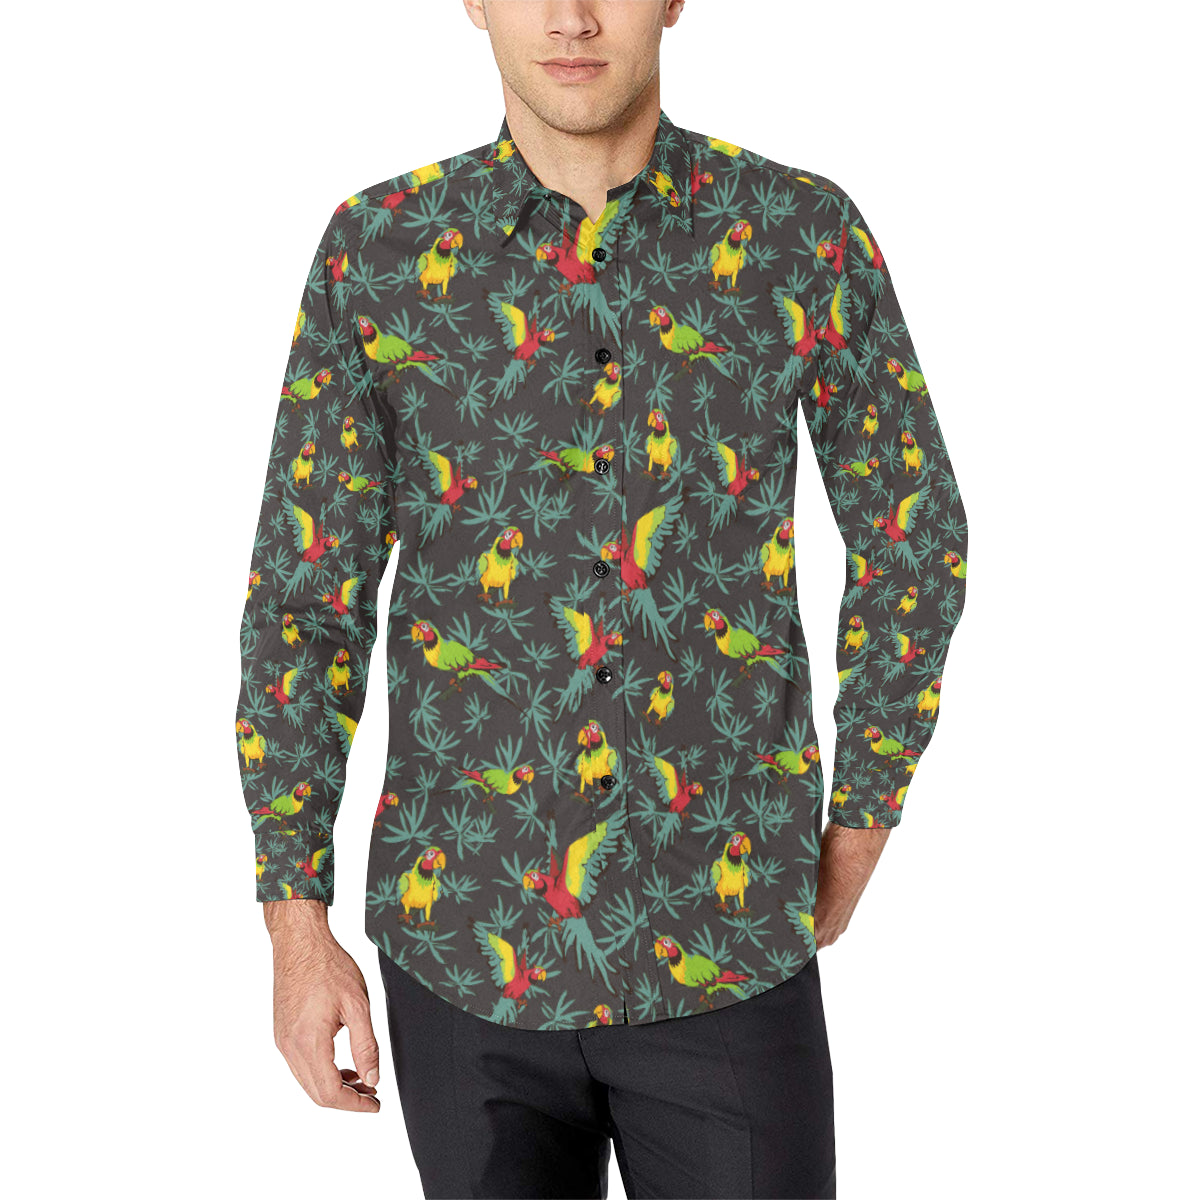 Parrot Themed Print Men's Long Sleeve Shirt